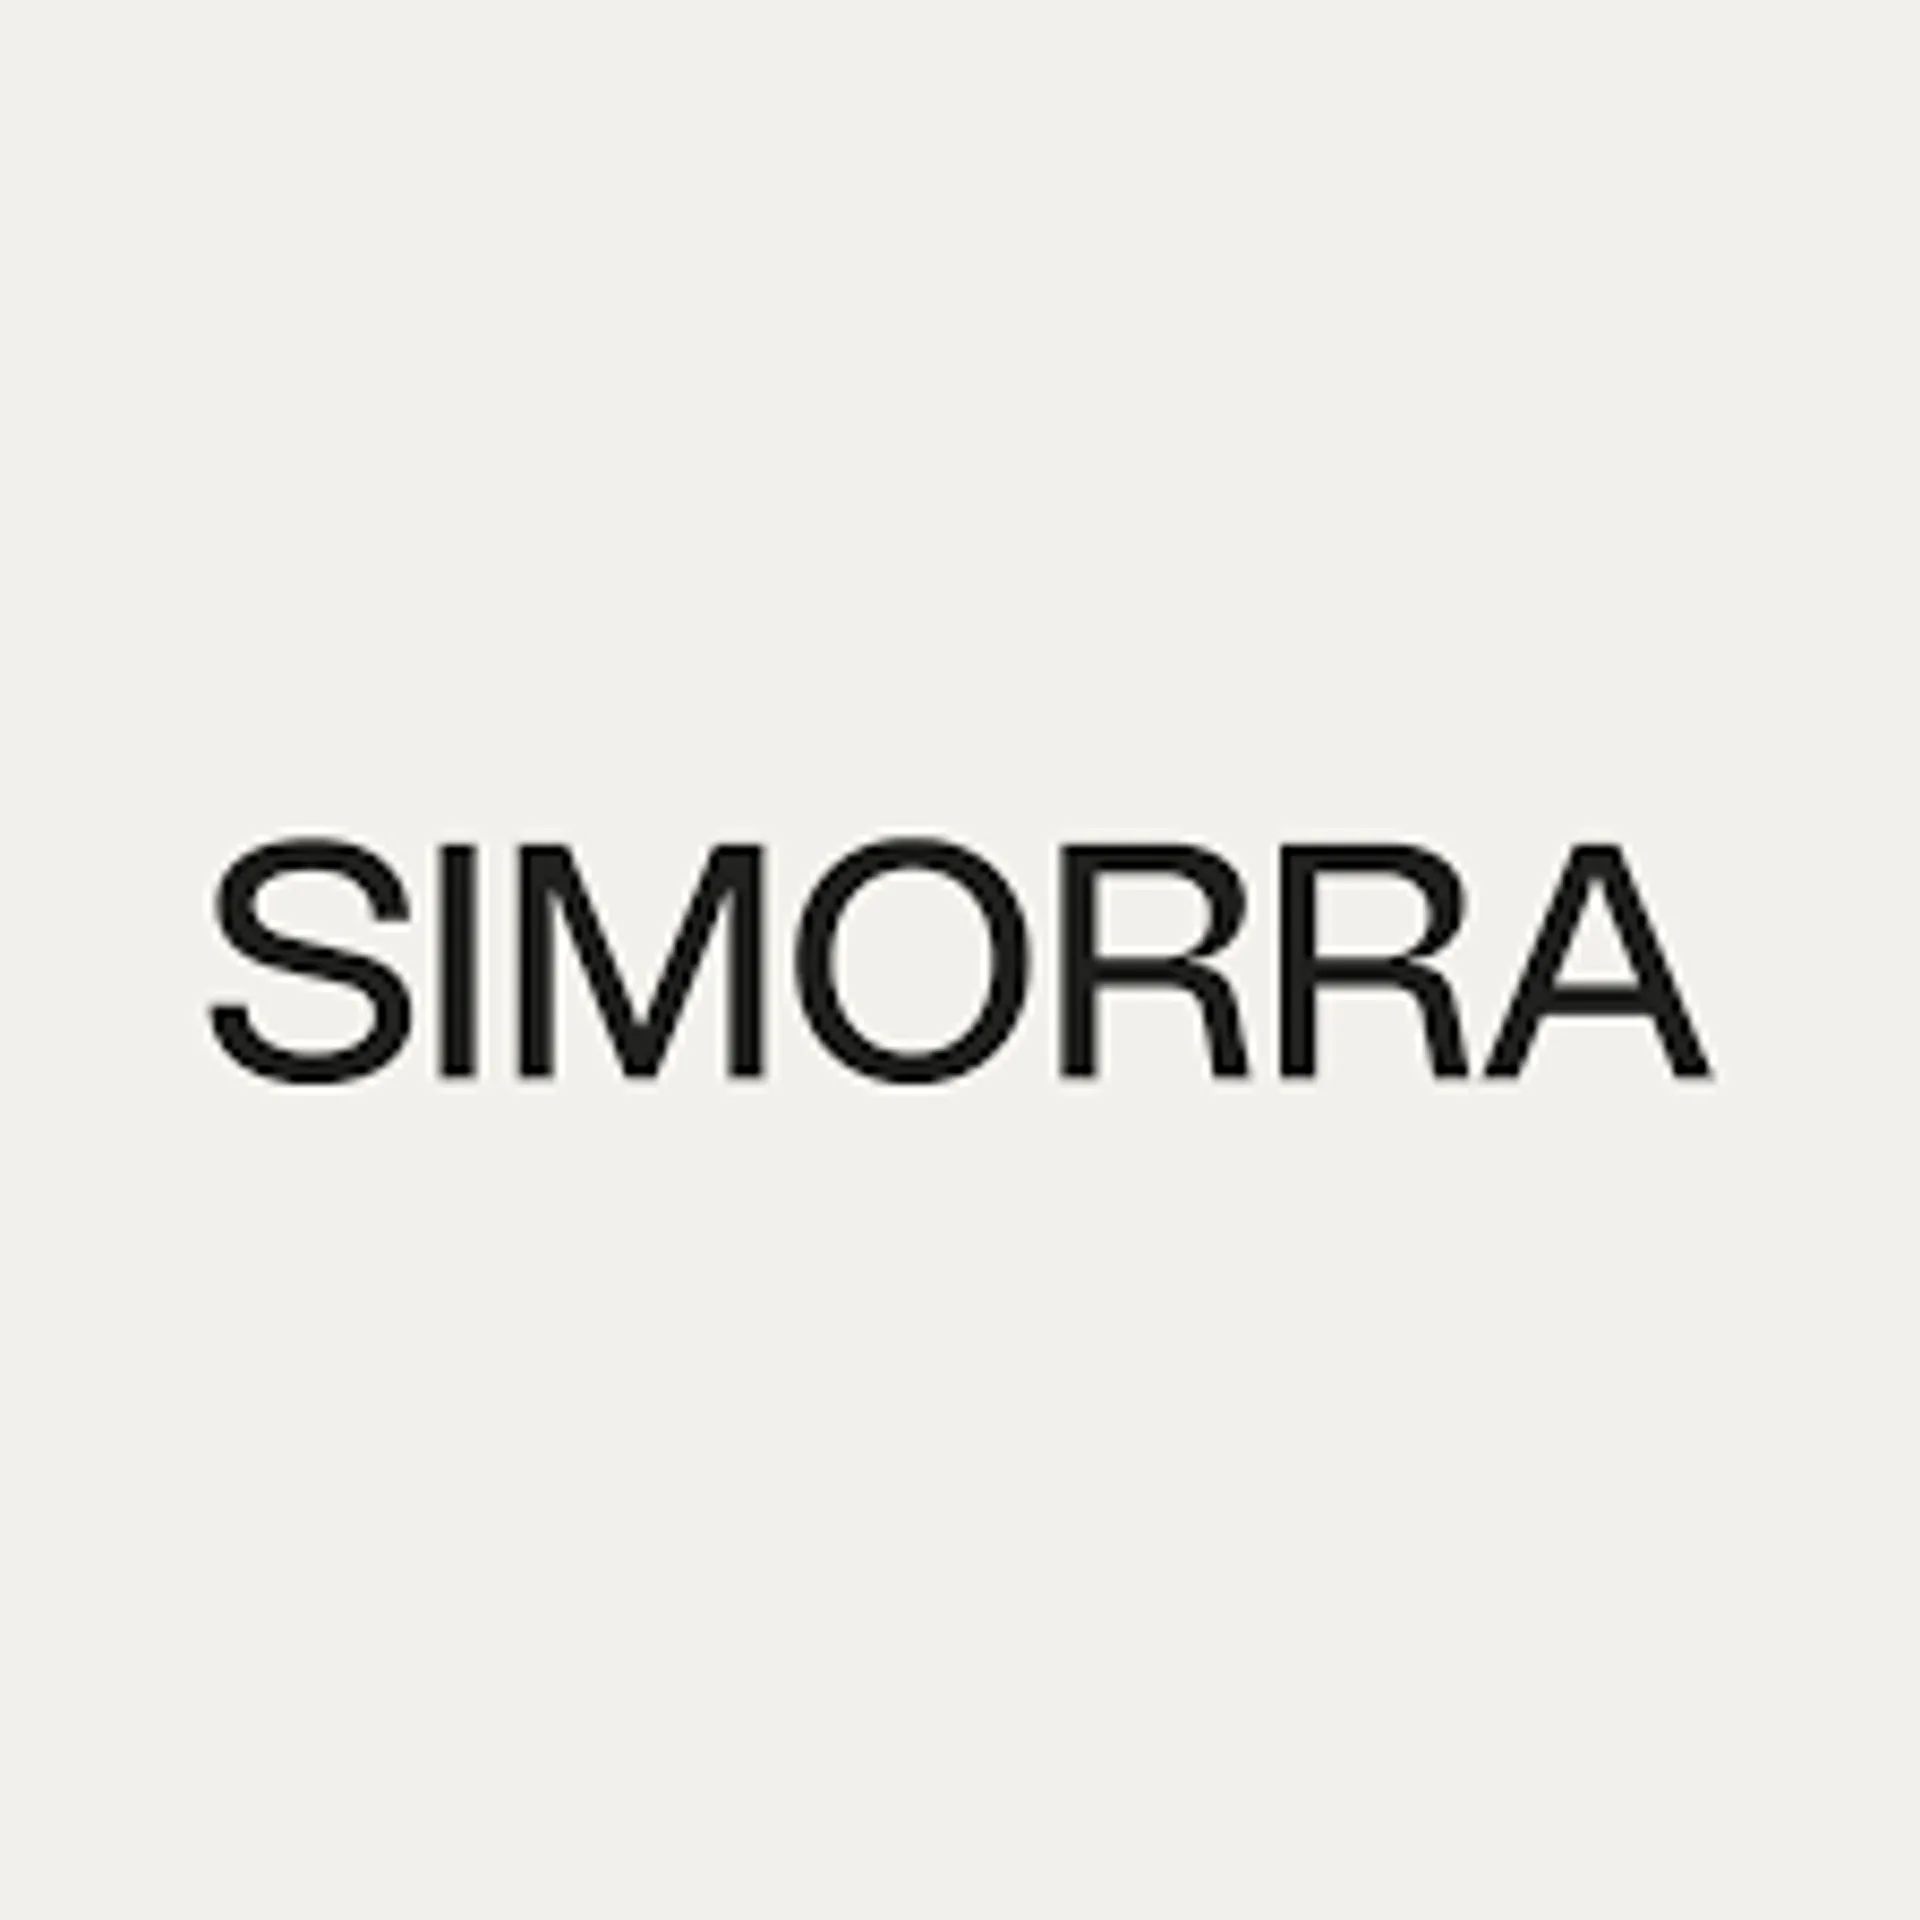 SIMORRA logo